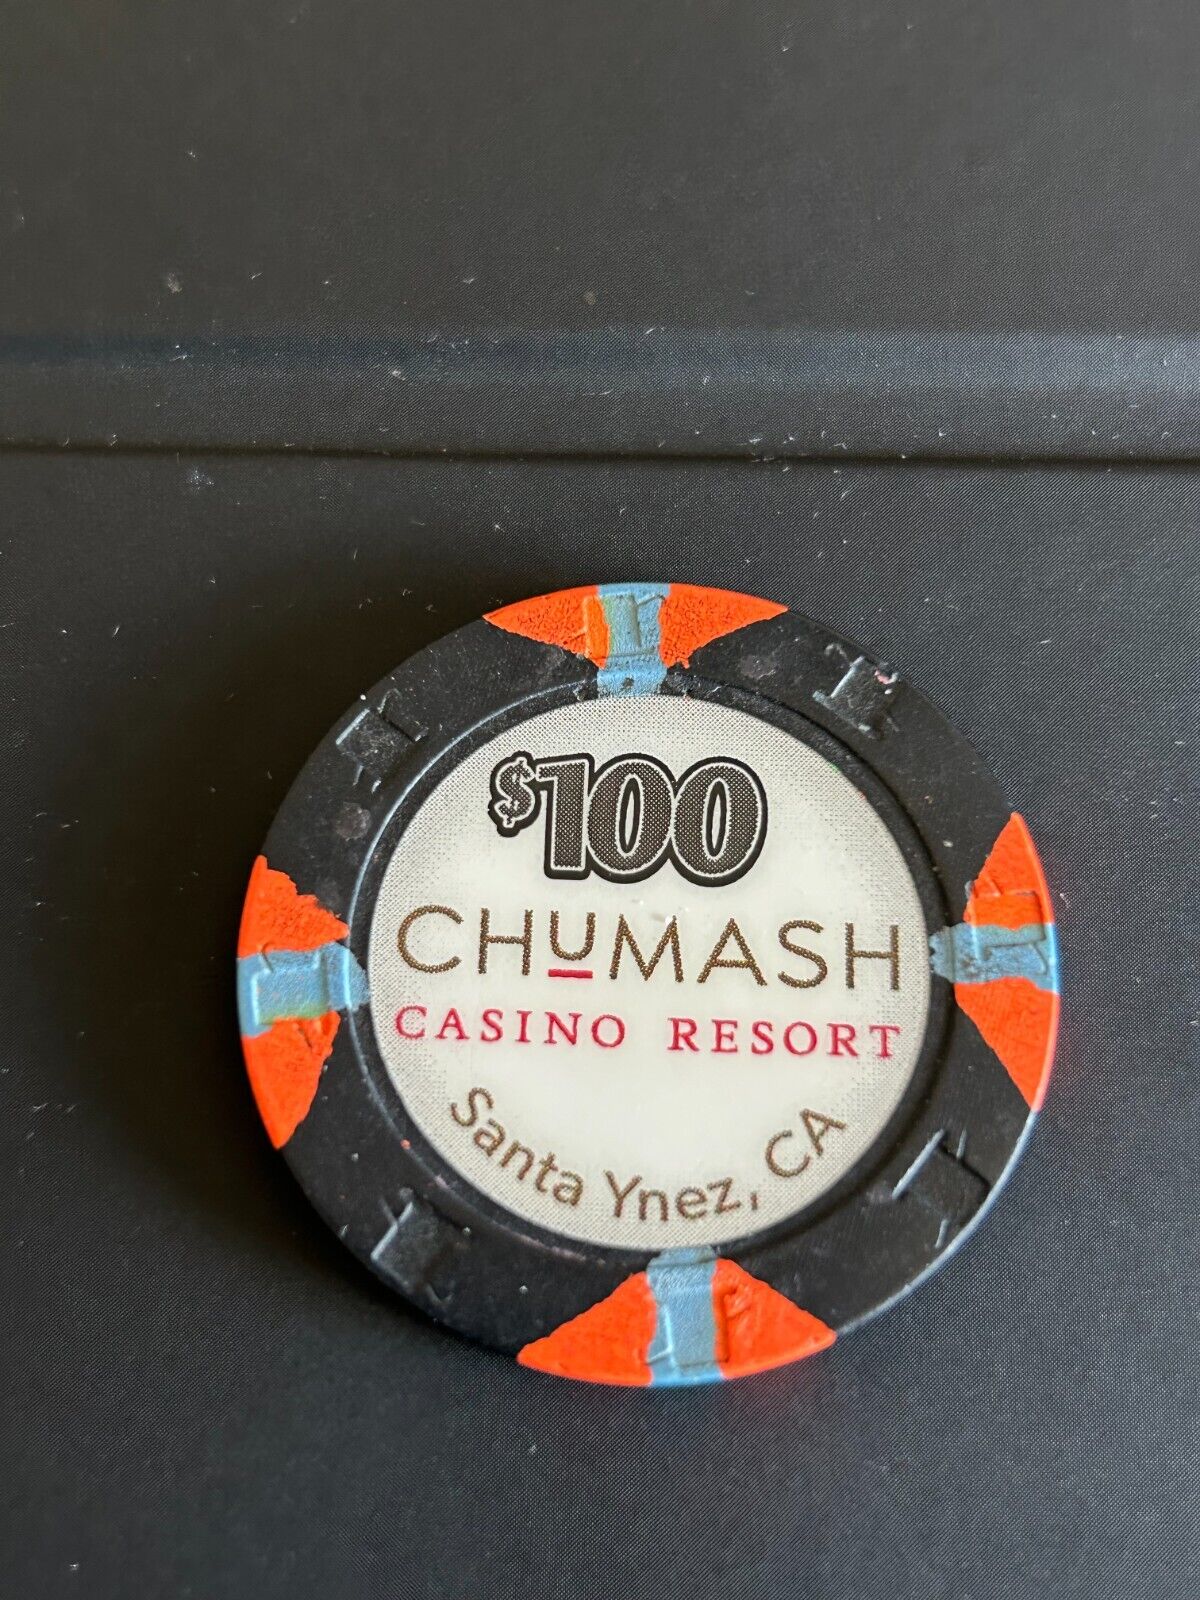 Chumash Casino Santa Ynez California $100 Dollar Gaming Chip as pictured